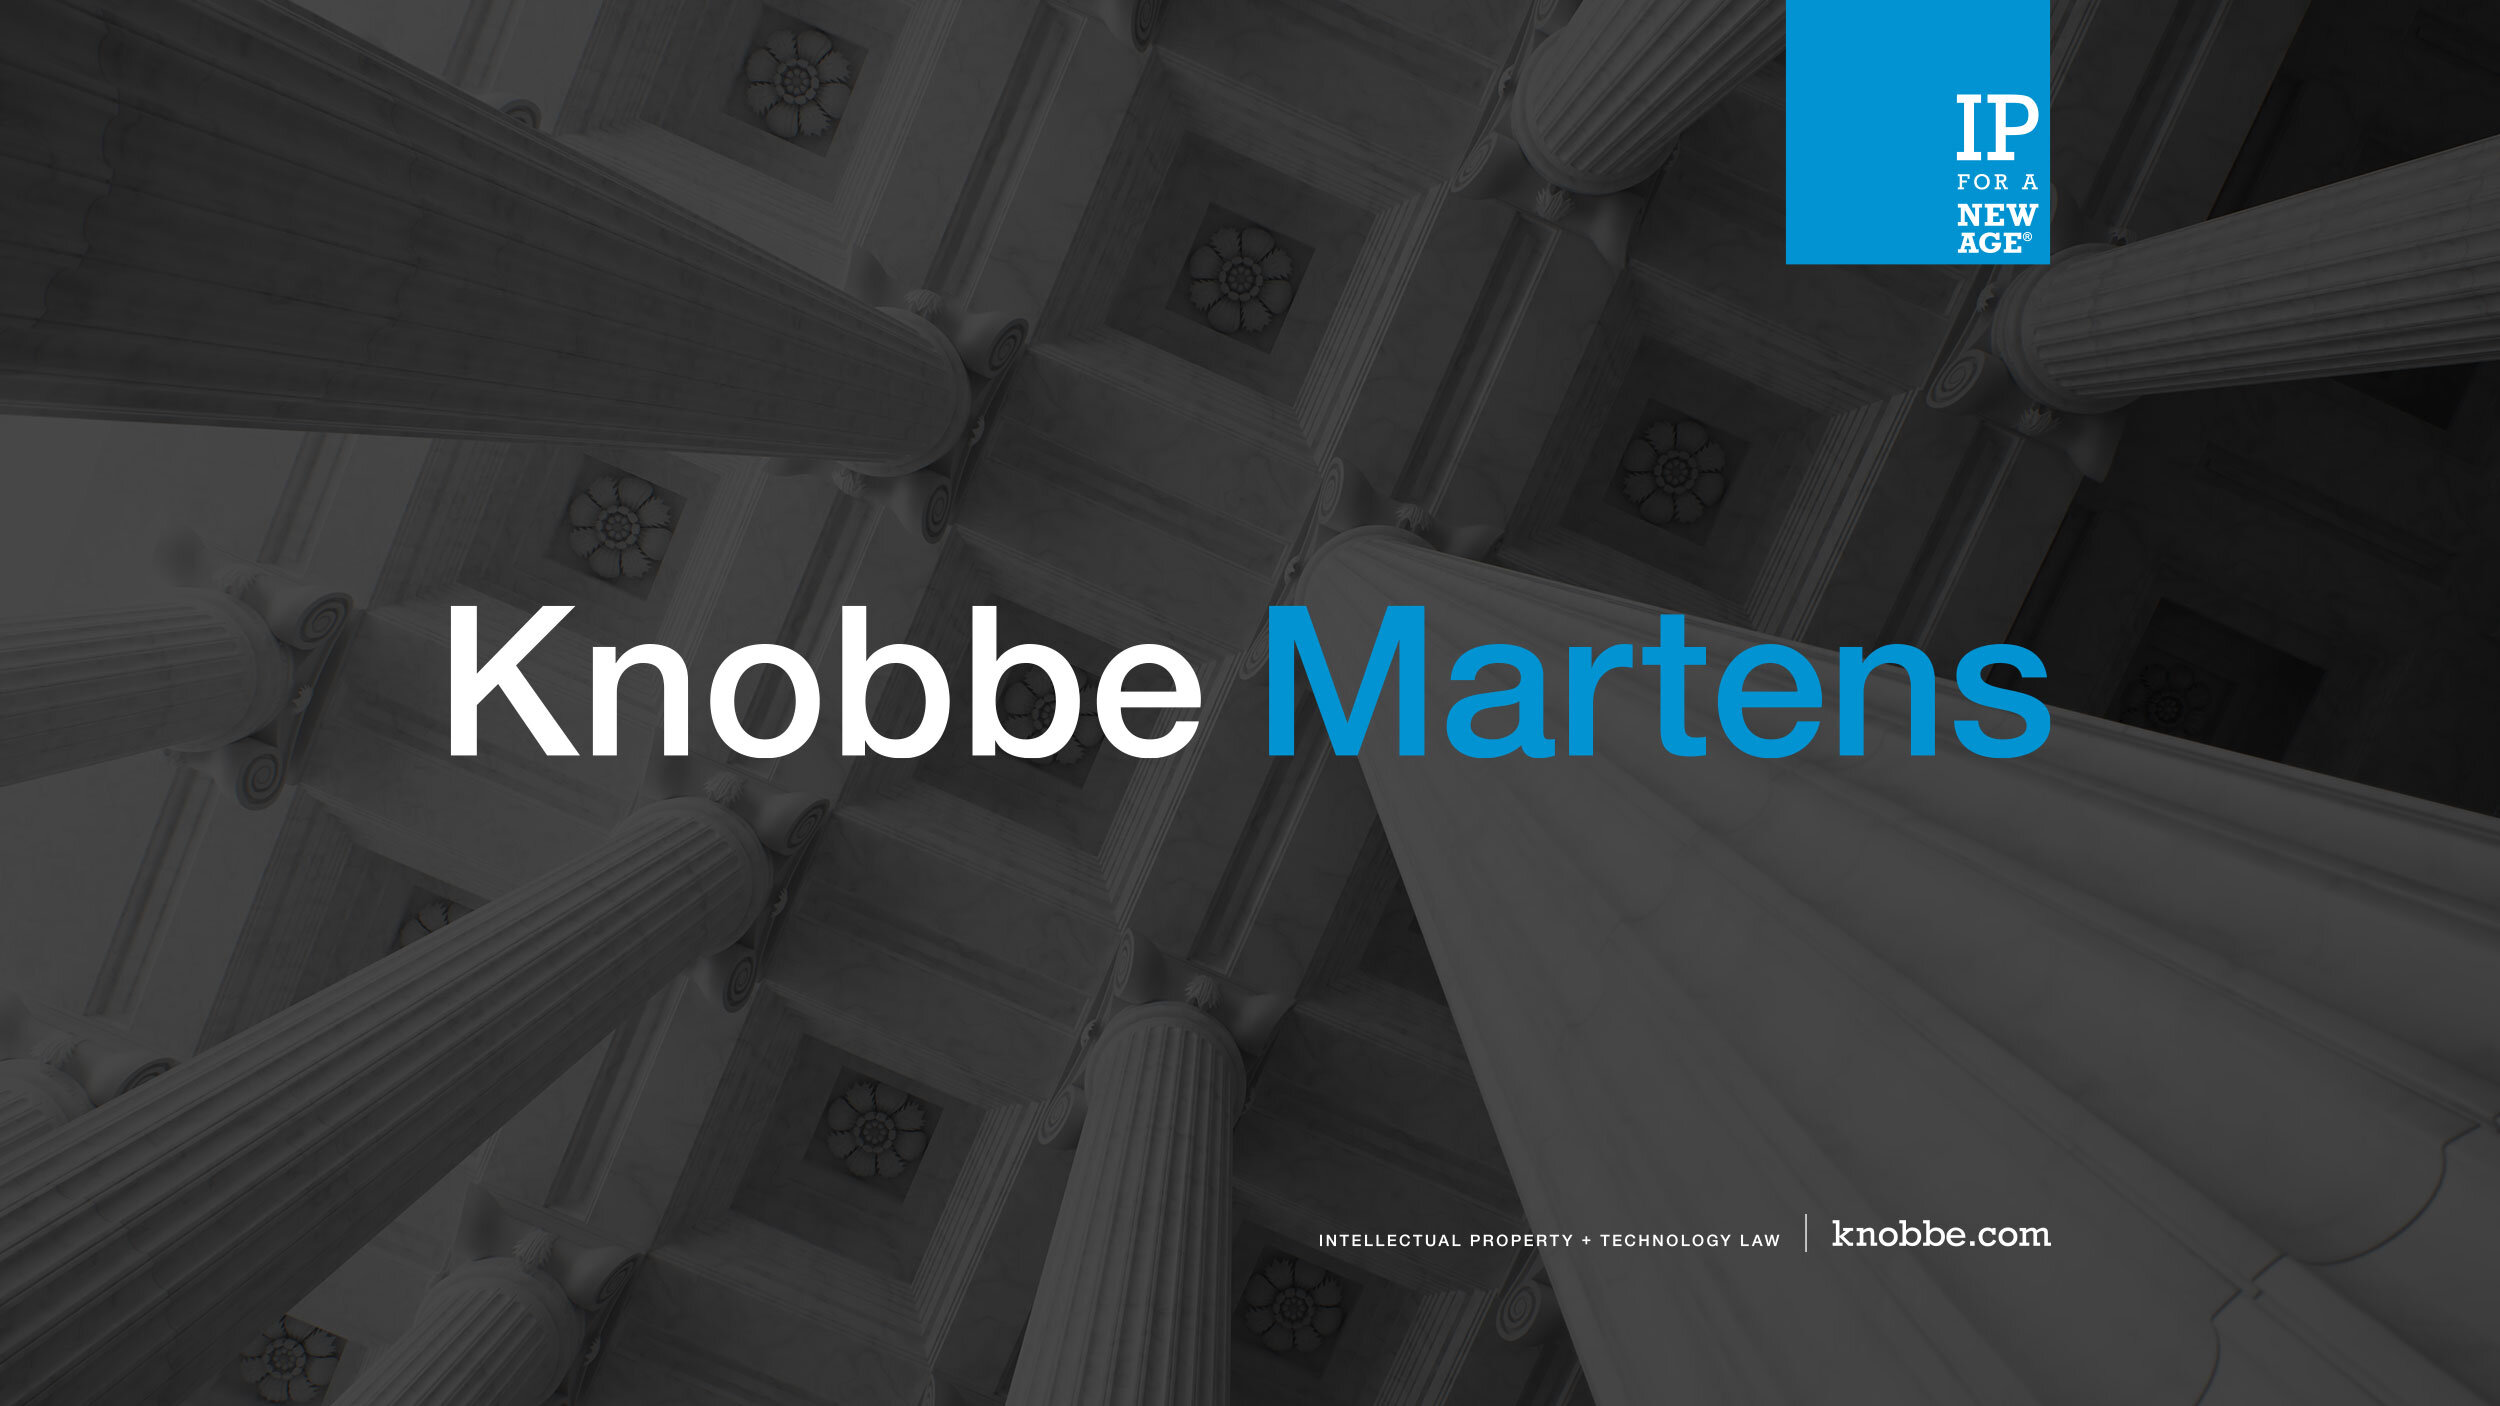 knobbe-martens-identity.jpg